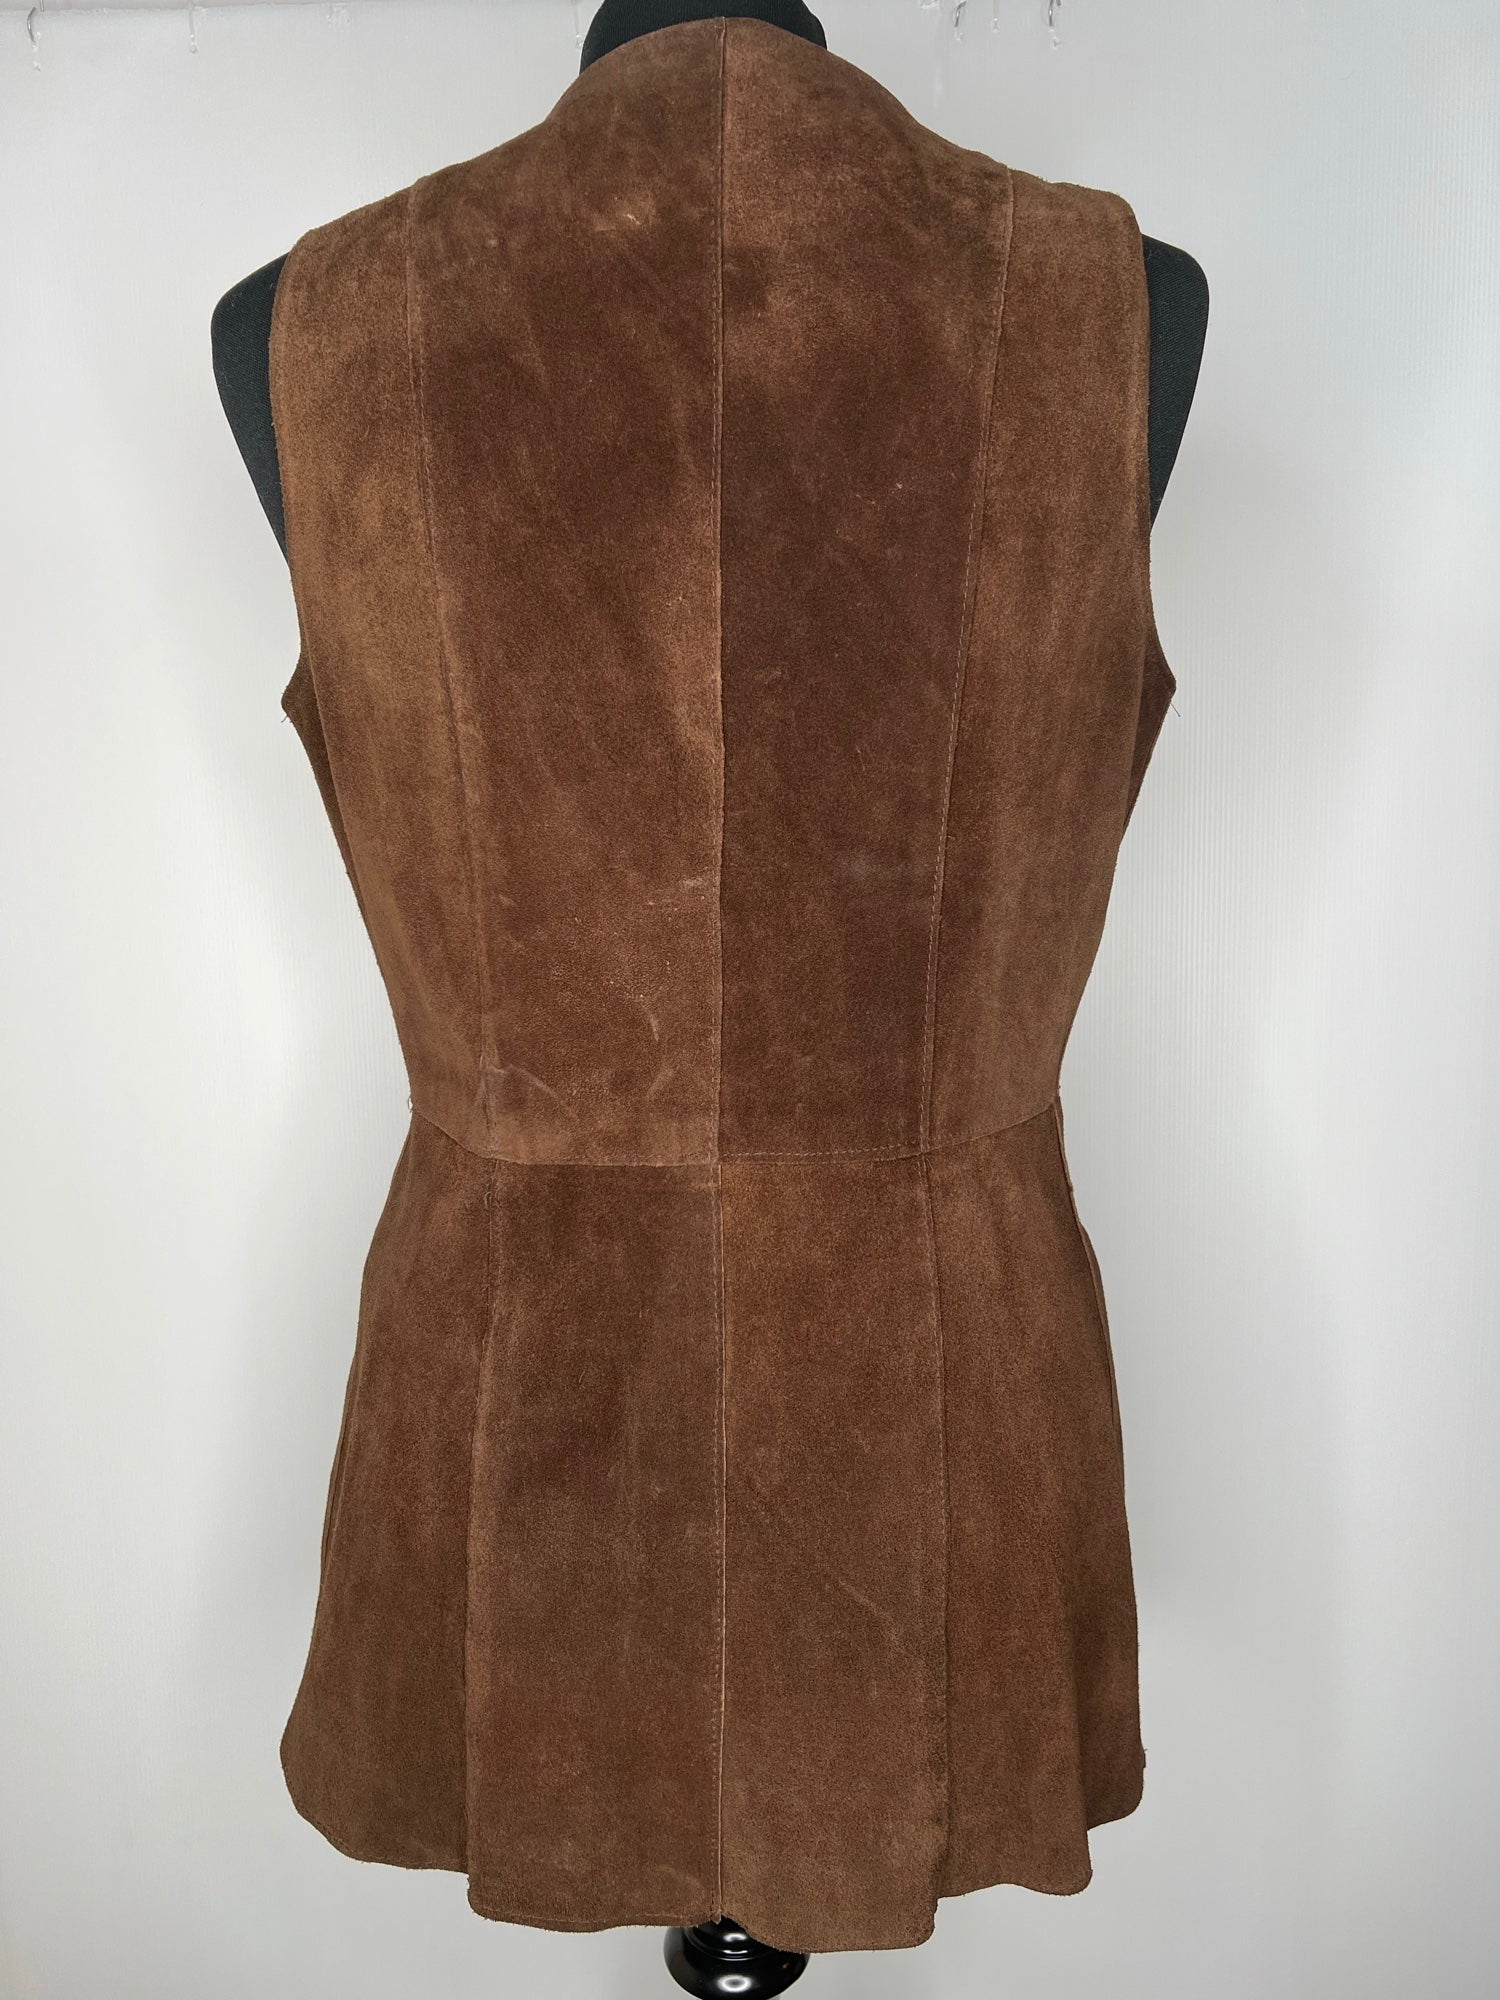 waistcoat  vintage  vest  tunic  Suede Jacket  Suede  mod  Jacket  hippie  gogo  brown  boho  70s  60s  1970s  1960s  12